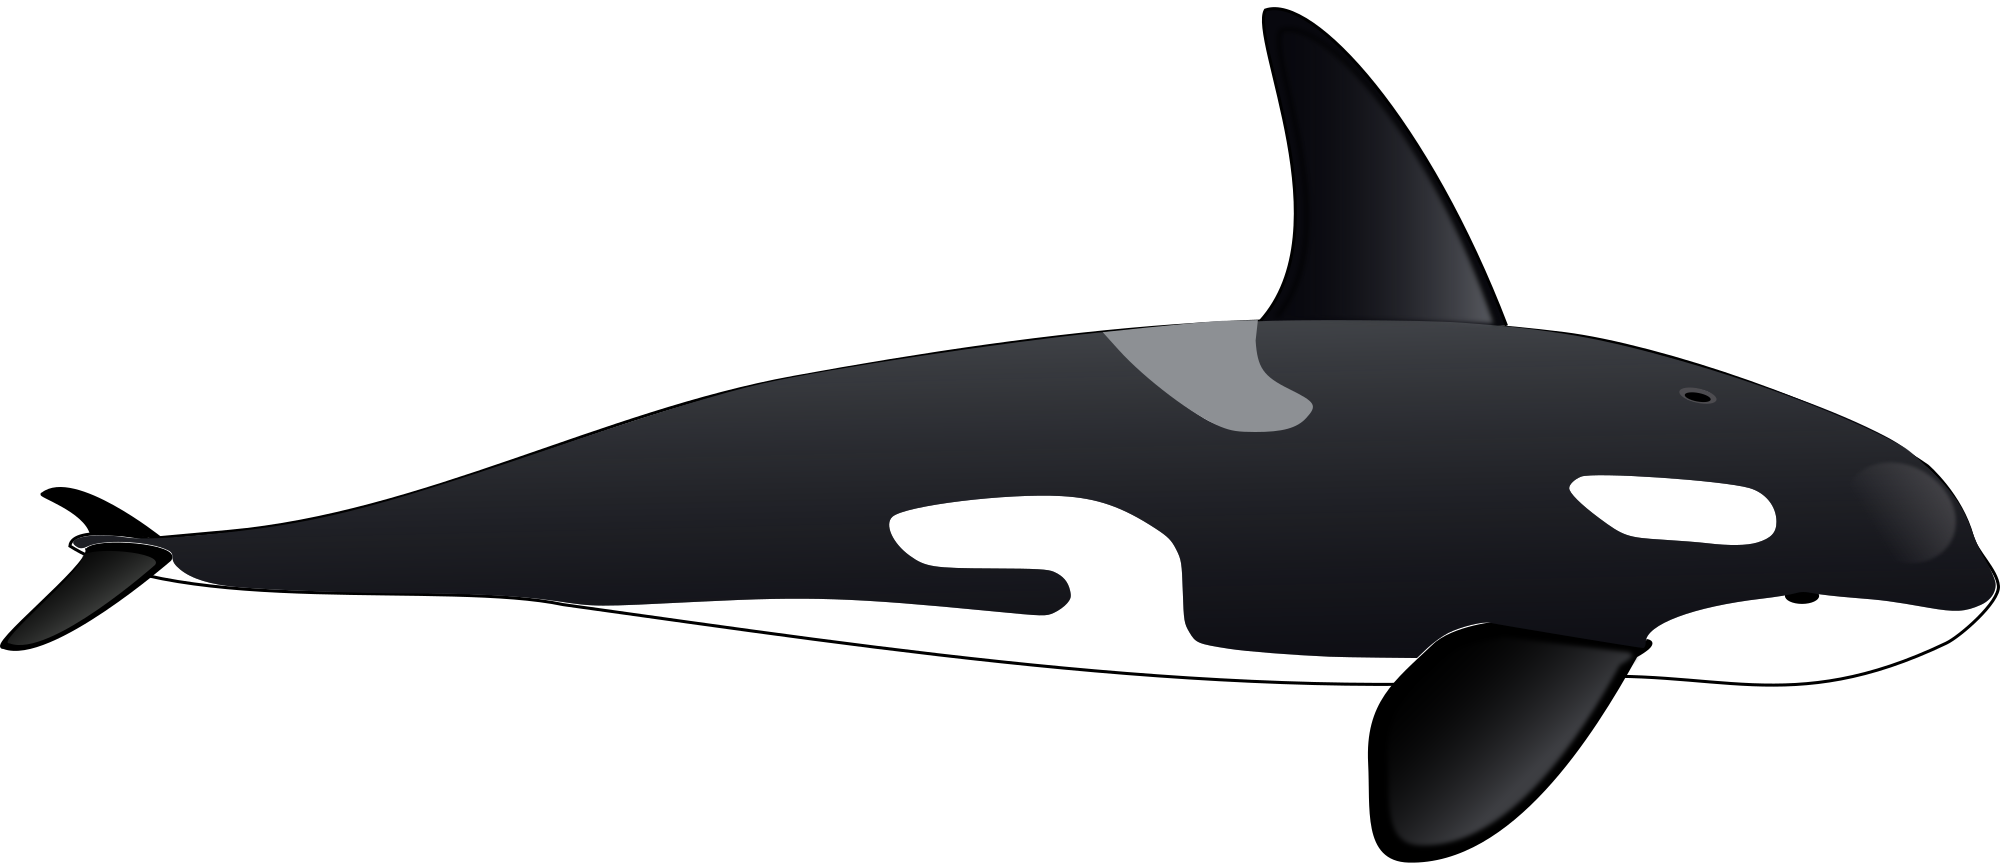 orca clipart realistic